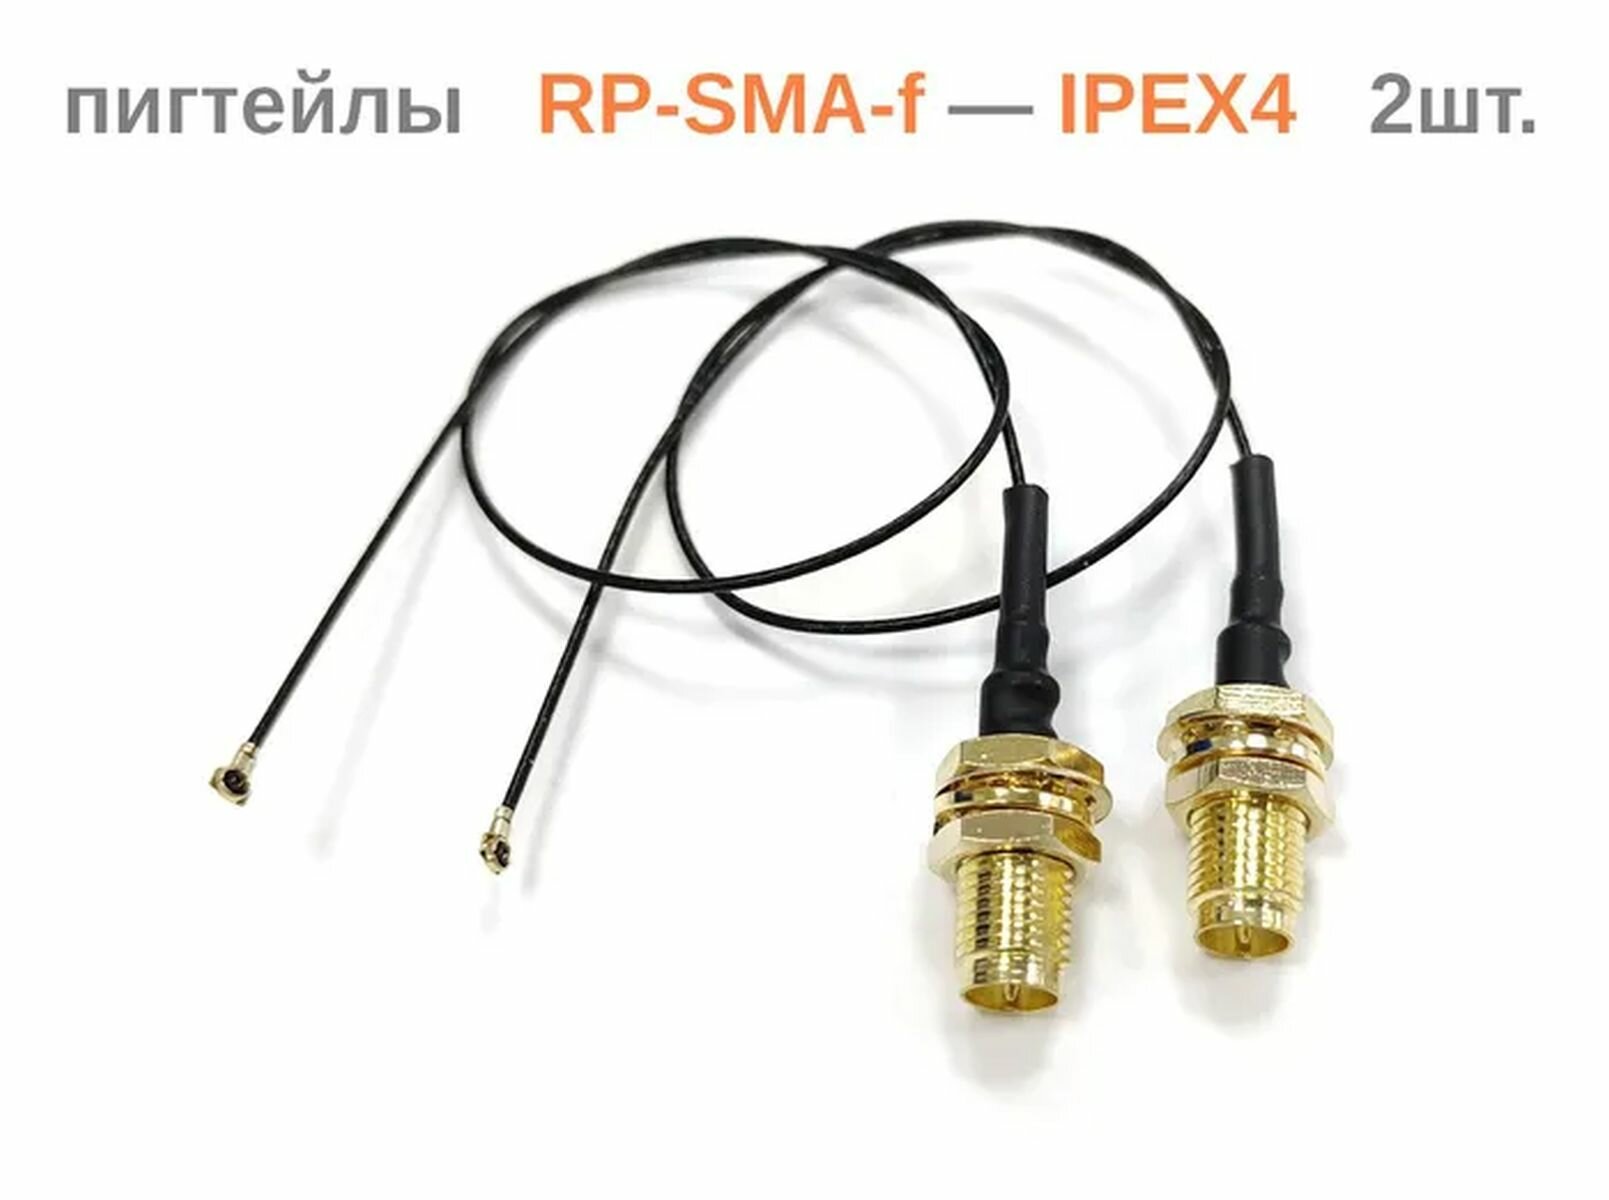 Комплект 2шт. адаптеров (пигтейлов), RP-SMA-f — U.FL MHF4 (I-PEX4), для Wi-Fi плат miniPCI-e